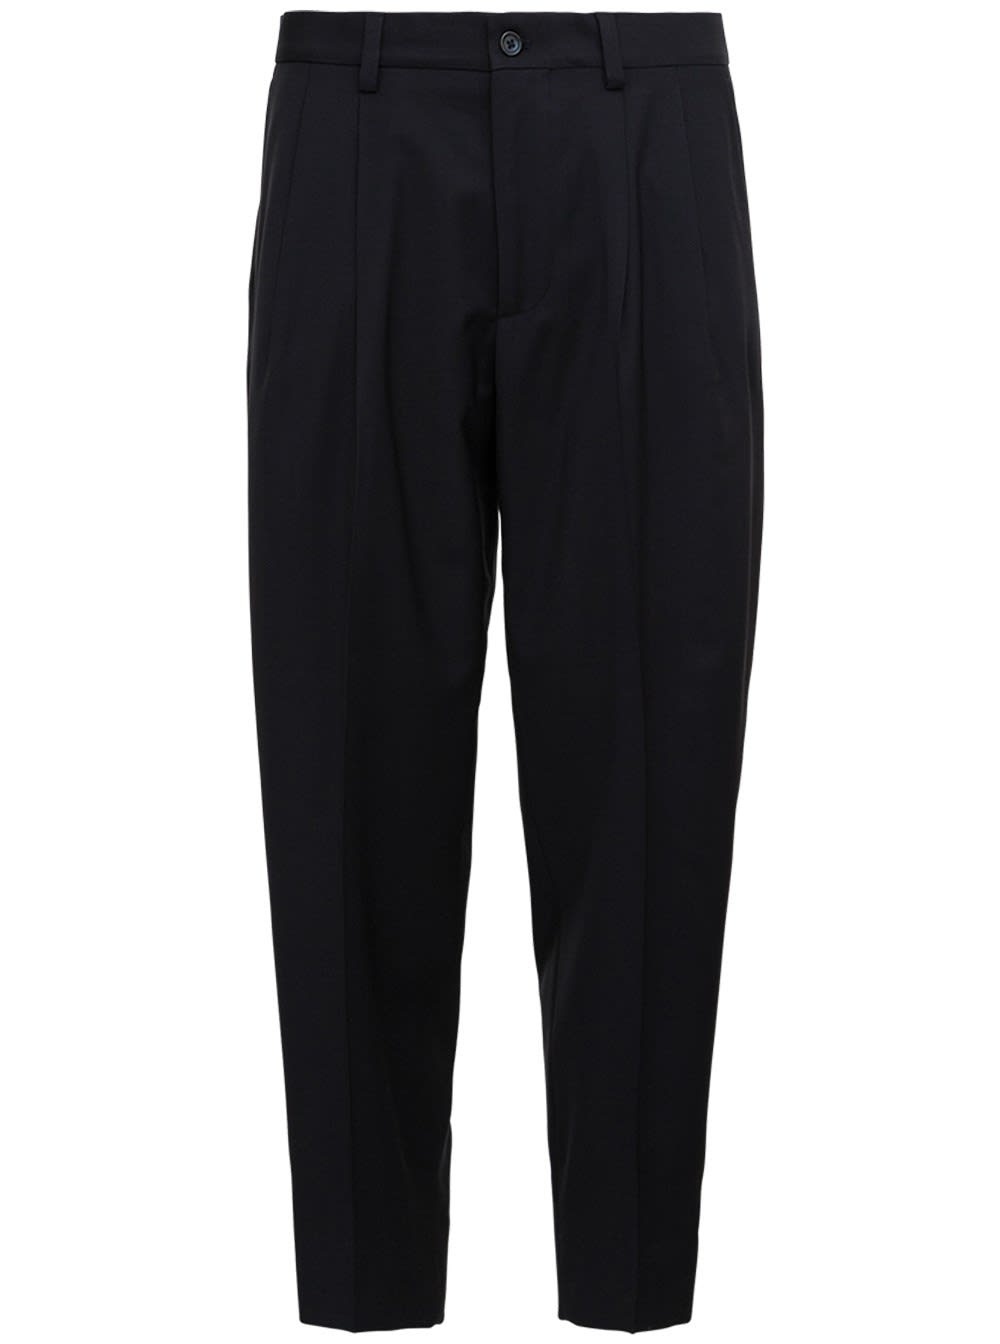 Dolce & Gabbana Black Cotton Tailored Pants